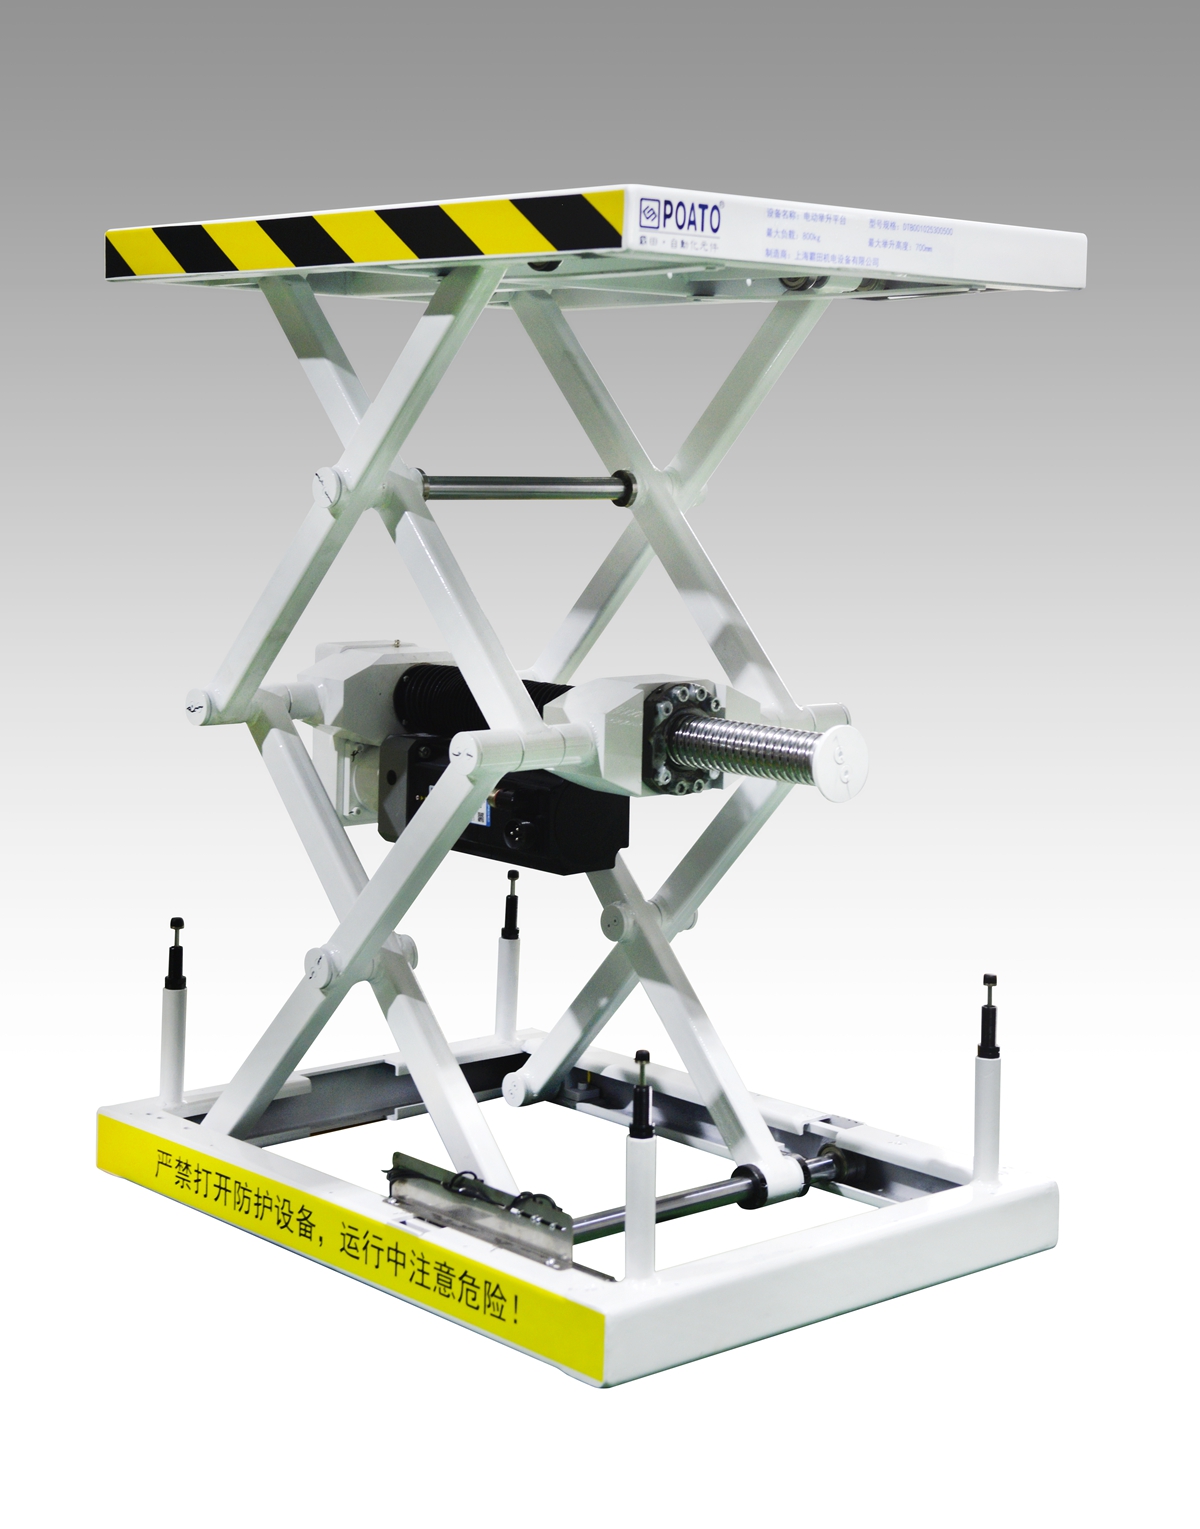 AGV lift platform